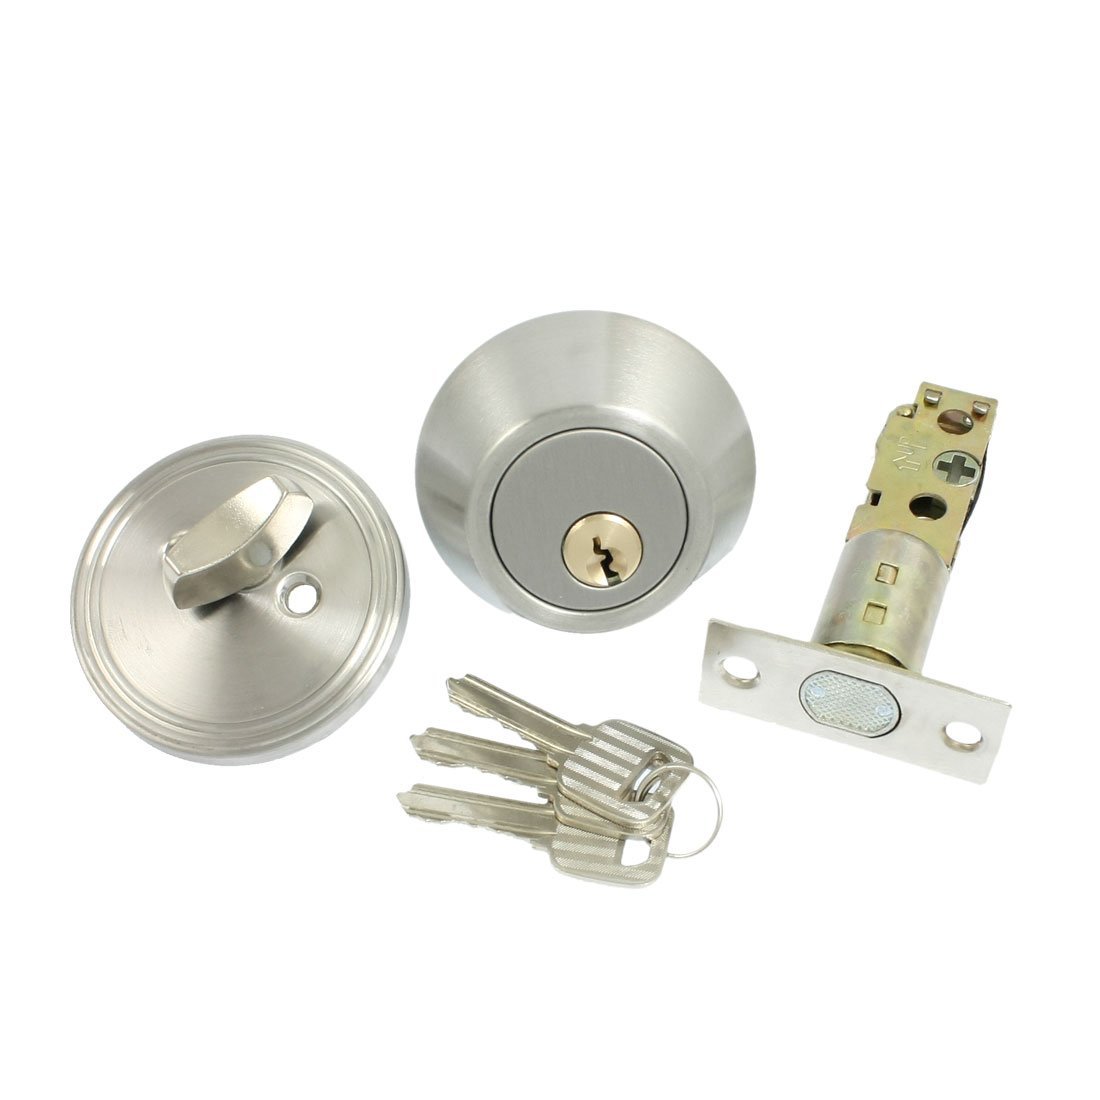 CNIM  Ȩ    ̱ Ǹ  Ʈ  ǹ /CNIM Hot Home Door Locking Security Single Cylinder Deadbolt Lock Silver Tone